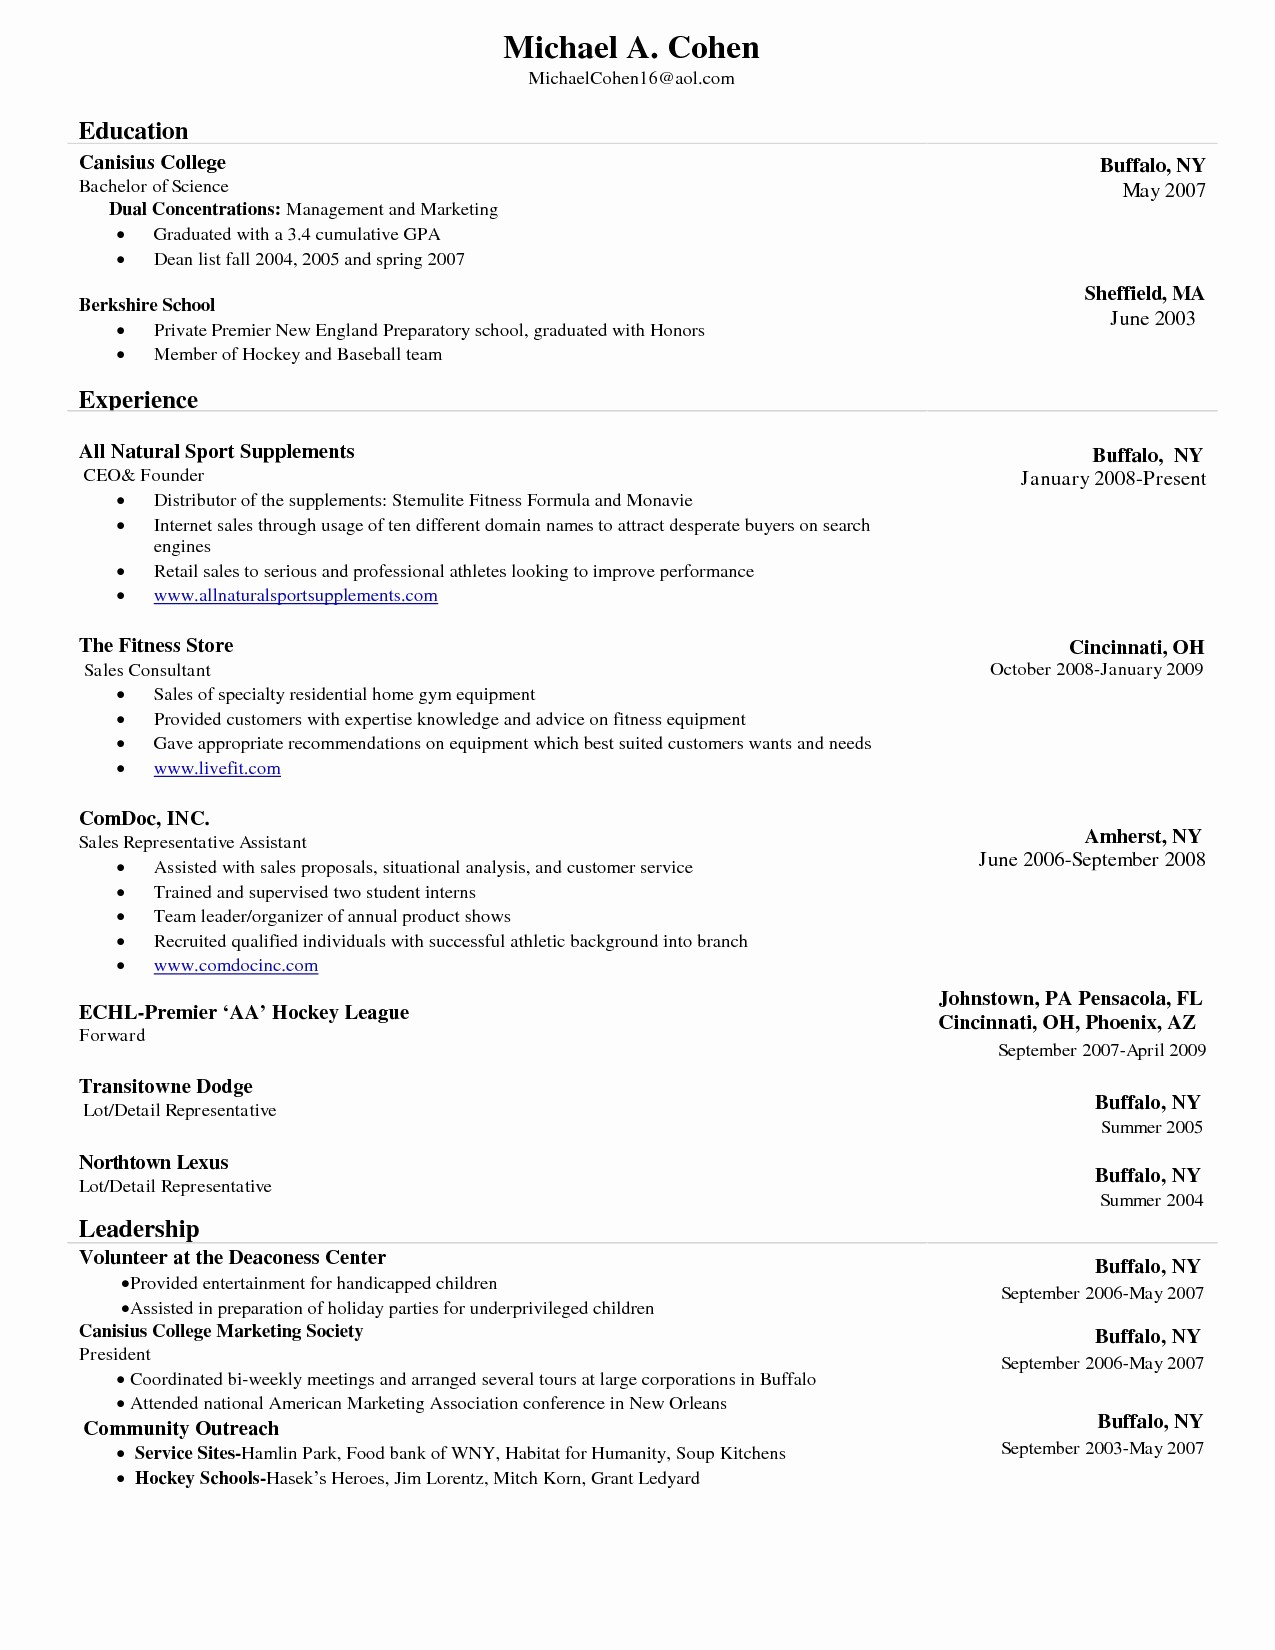 Creative Resume Template Microsoft Word New 41 Last Creative Resume Templates Free Download for